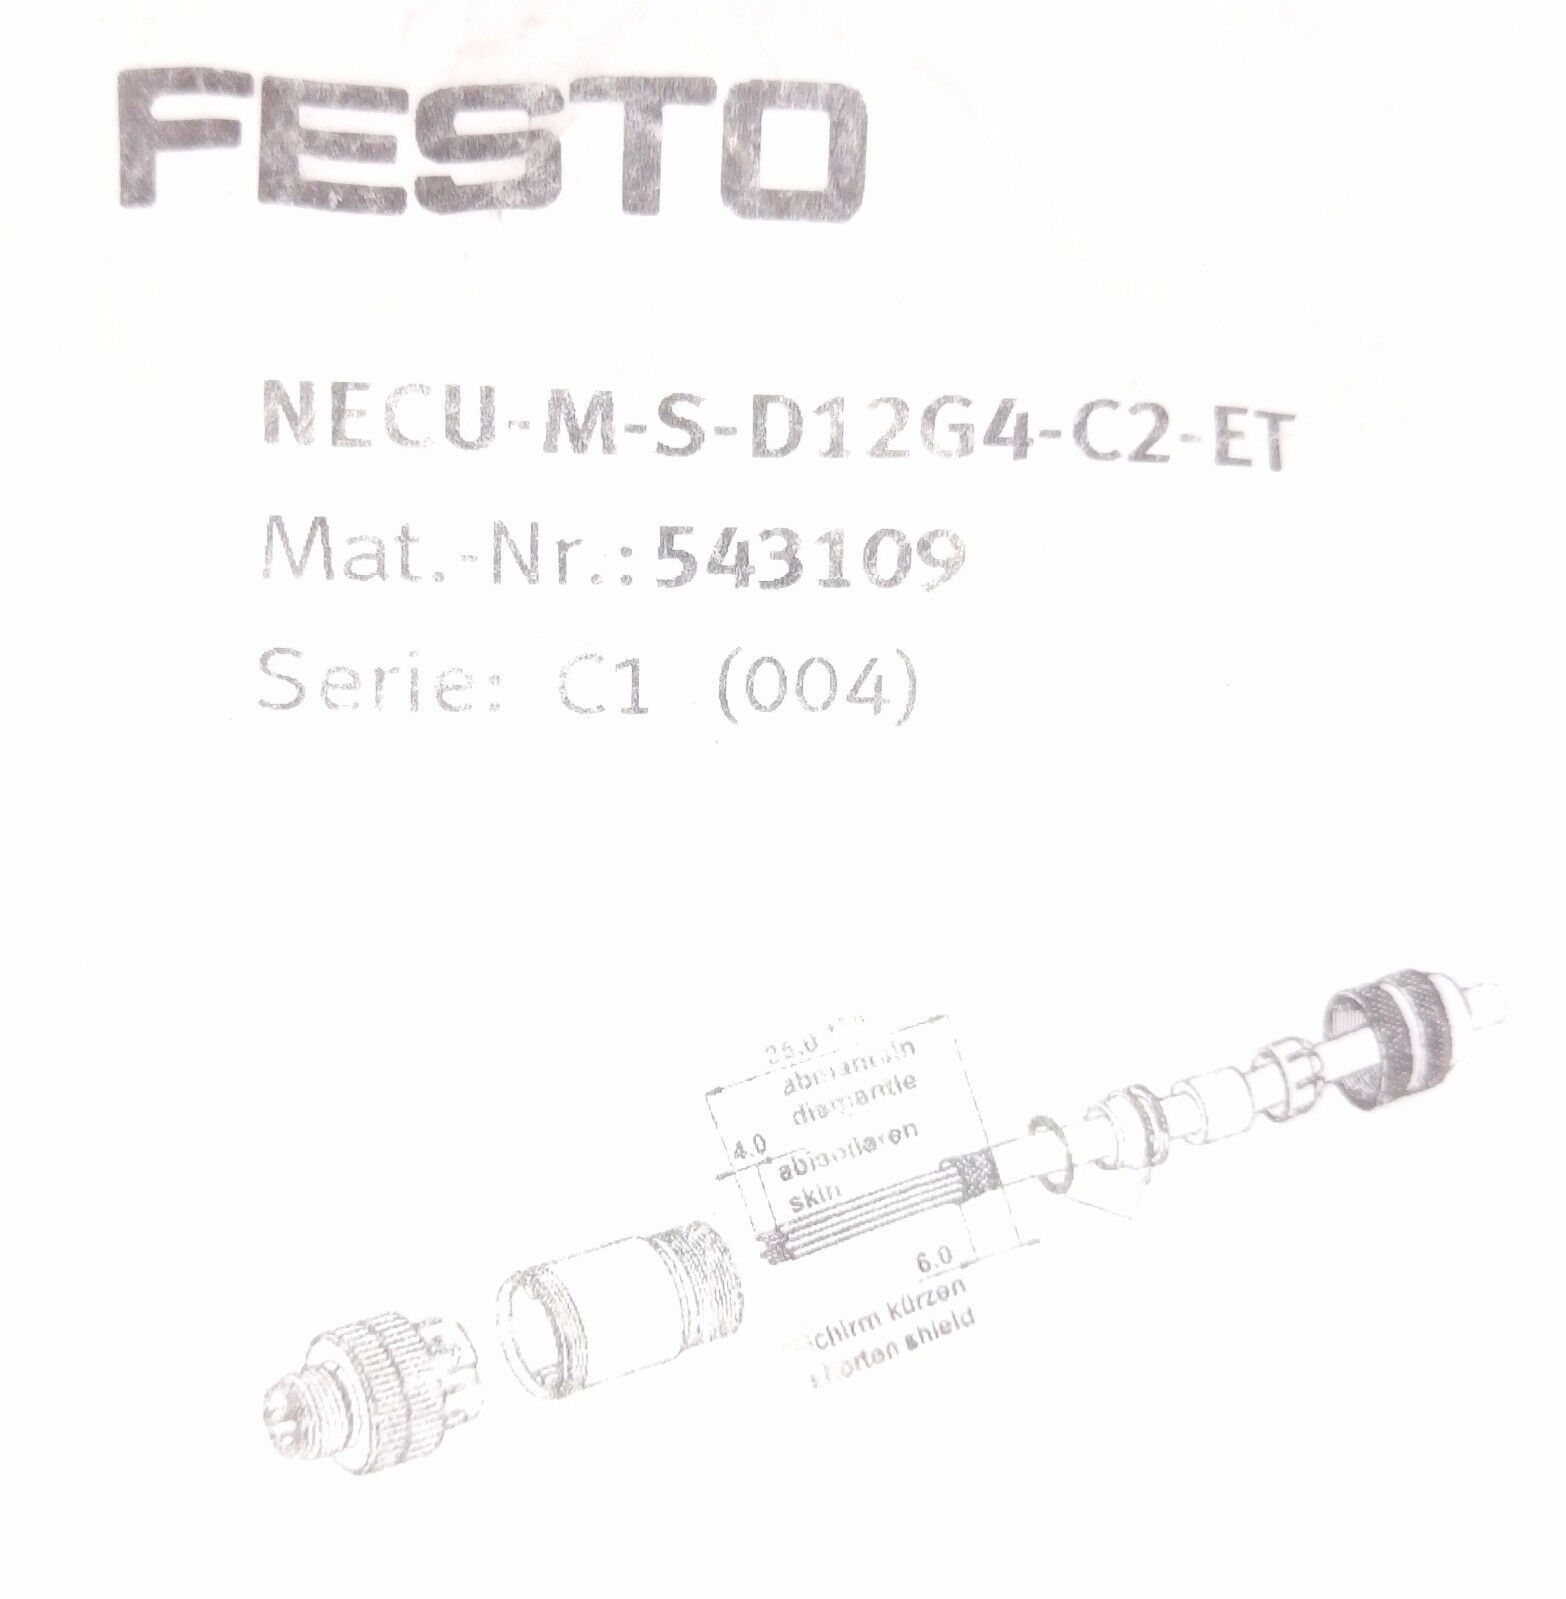 FESTO 543109 necu-m-s-d12g4-c2-et 插头连接器模块化电气终端 CPX 